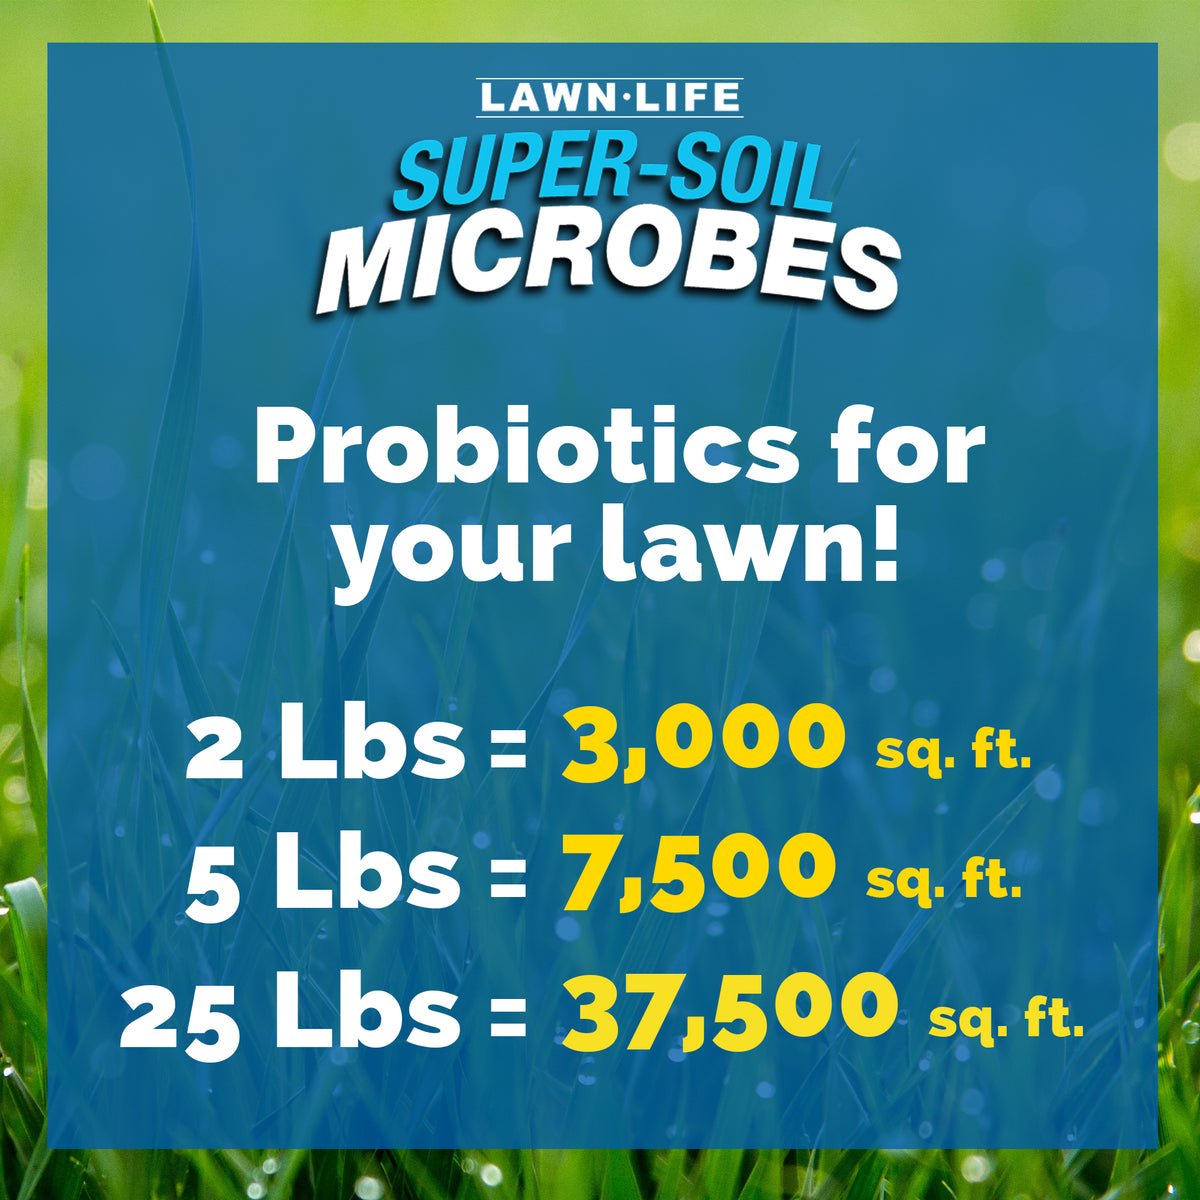 Lawn Life | Organic Super-Soil Microbes